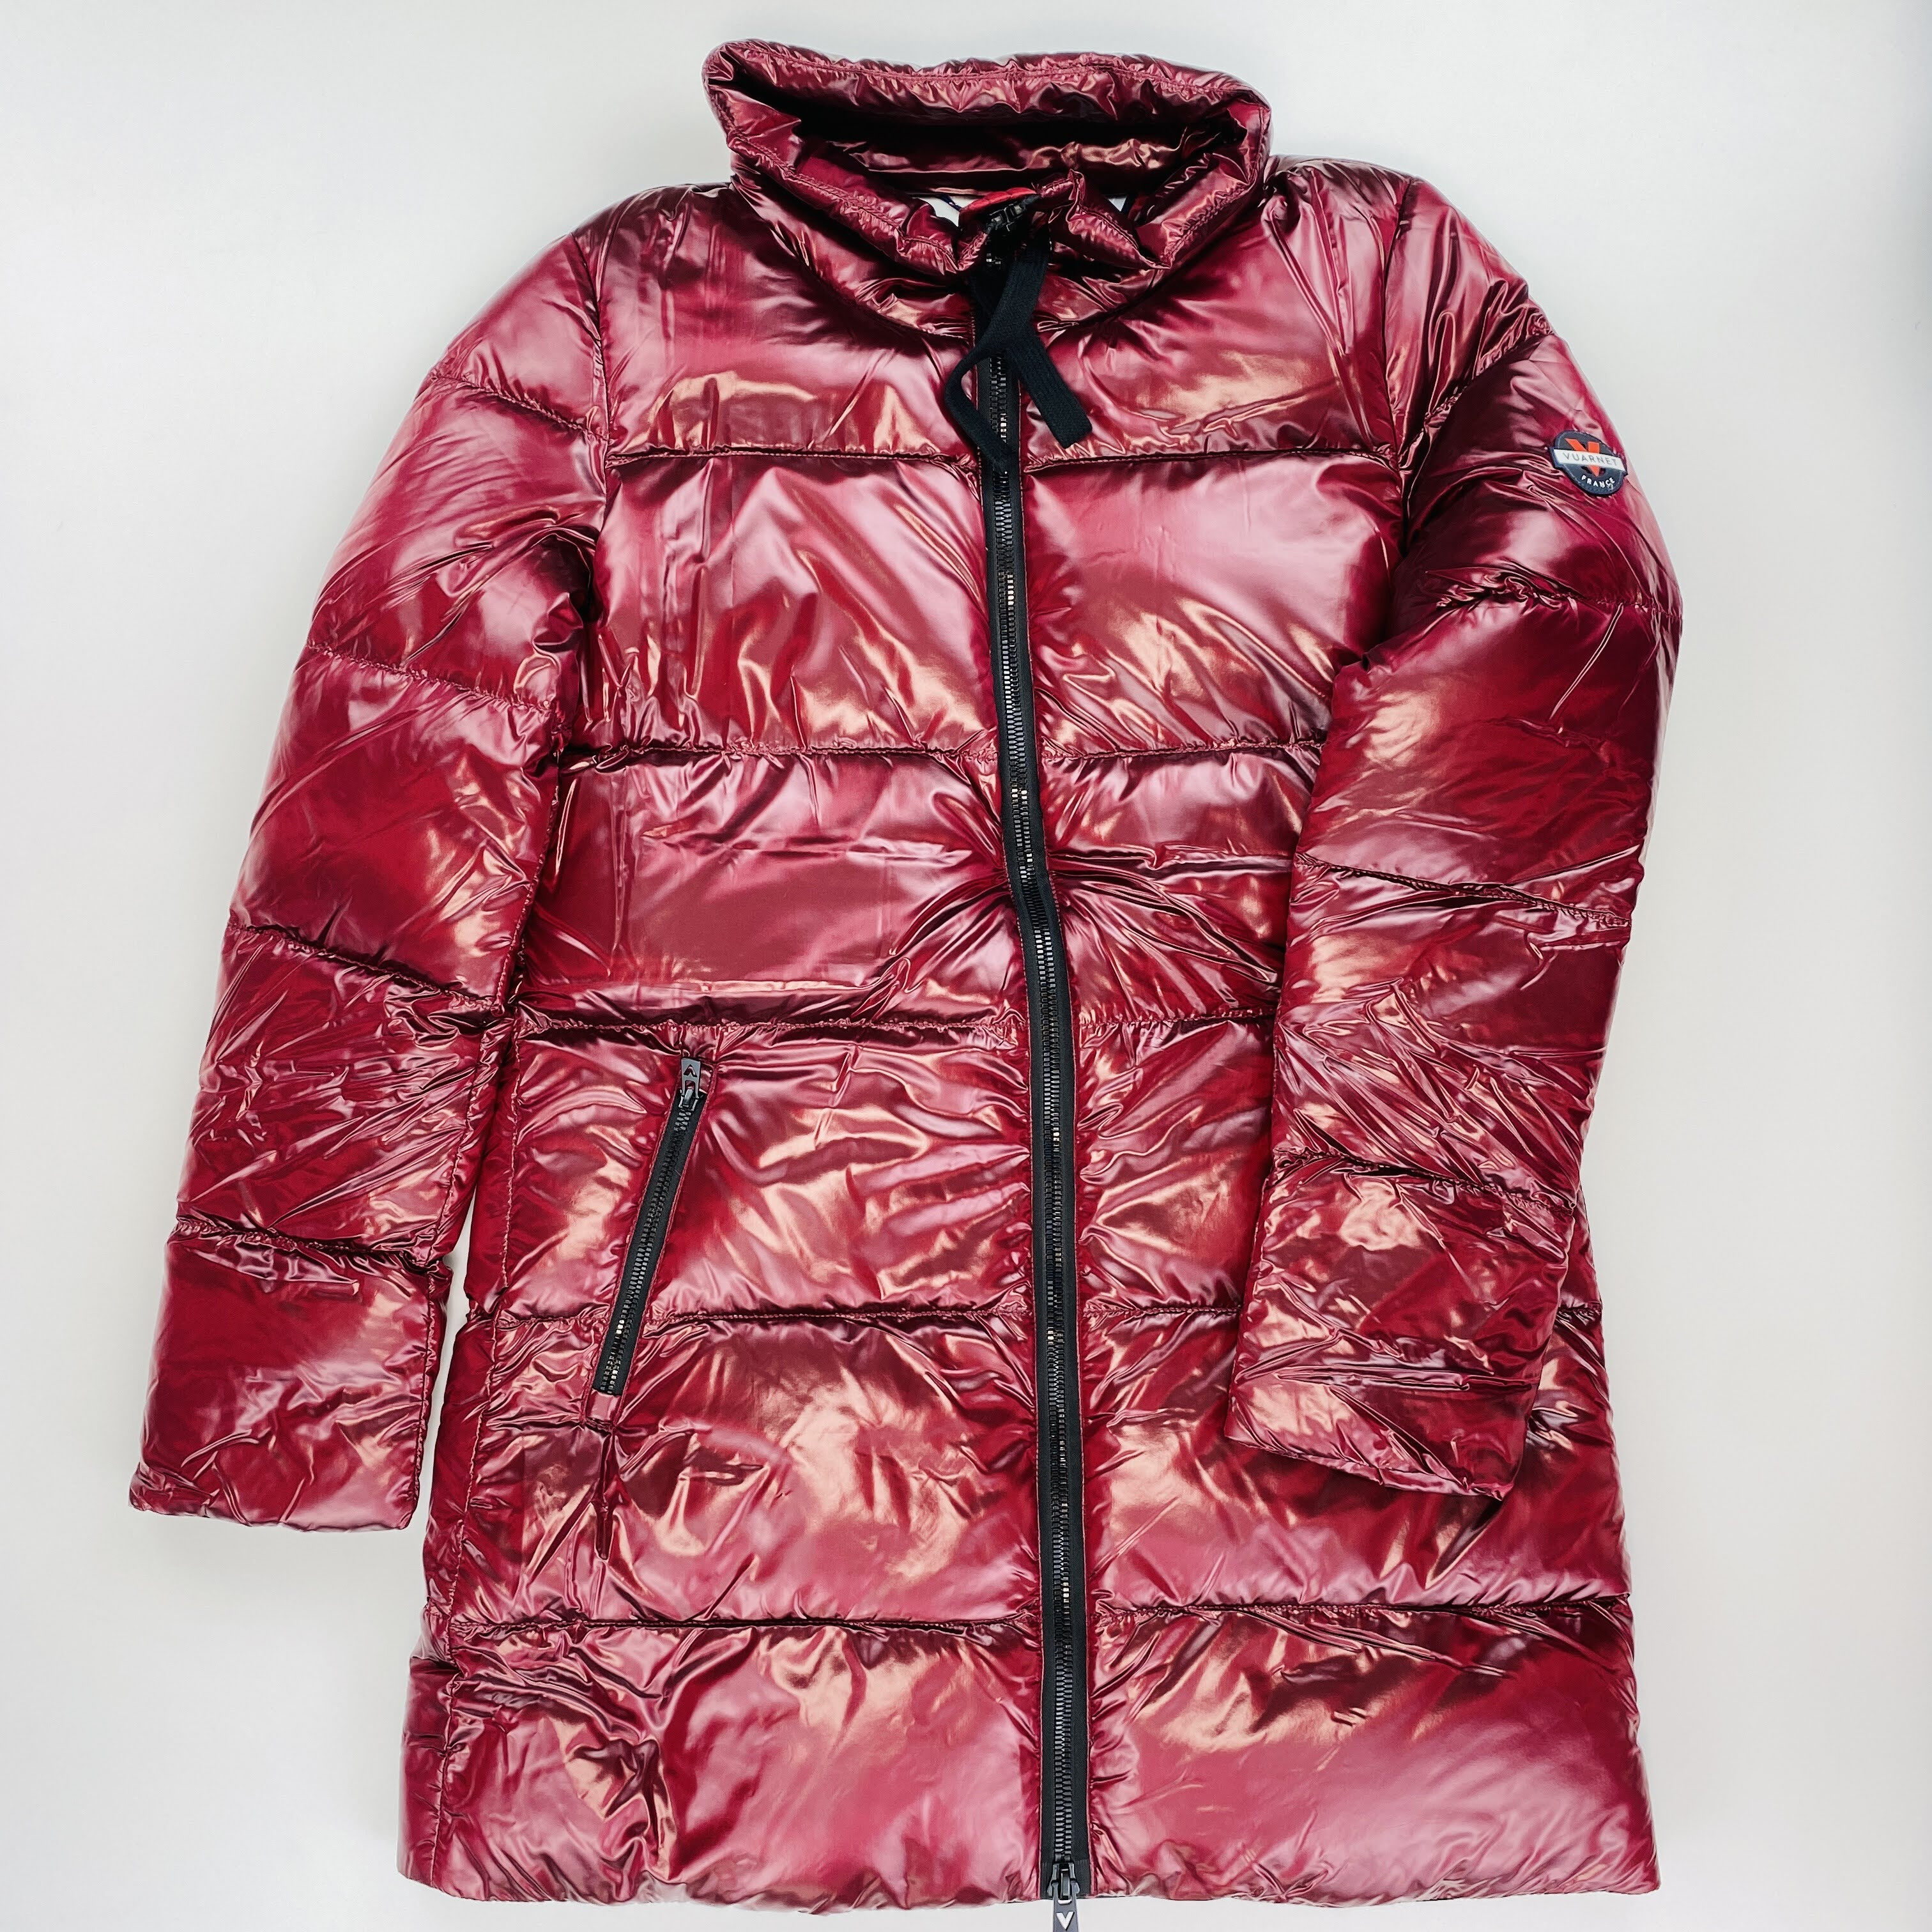 Vuarnet Kasai Jacket - Second Hand Synthetic jacket - Women's - Red - S | Hardloop